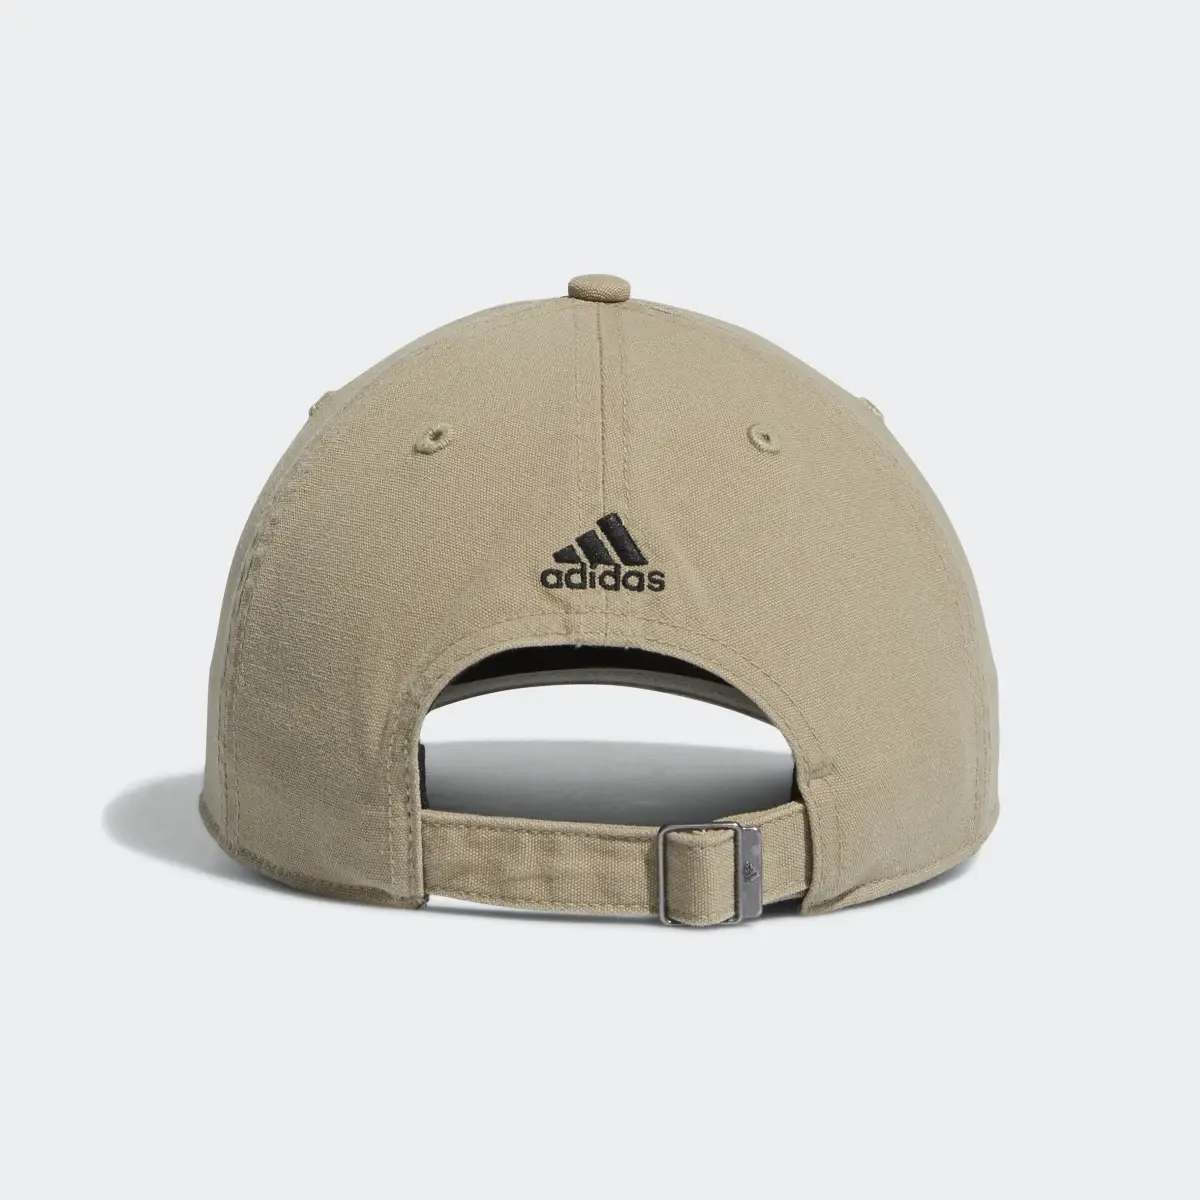 Adidas Ultimate Hat. 3